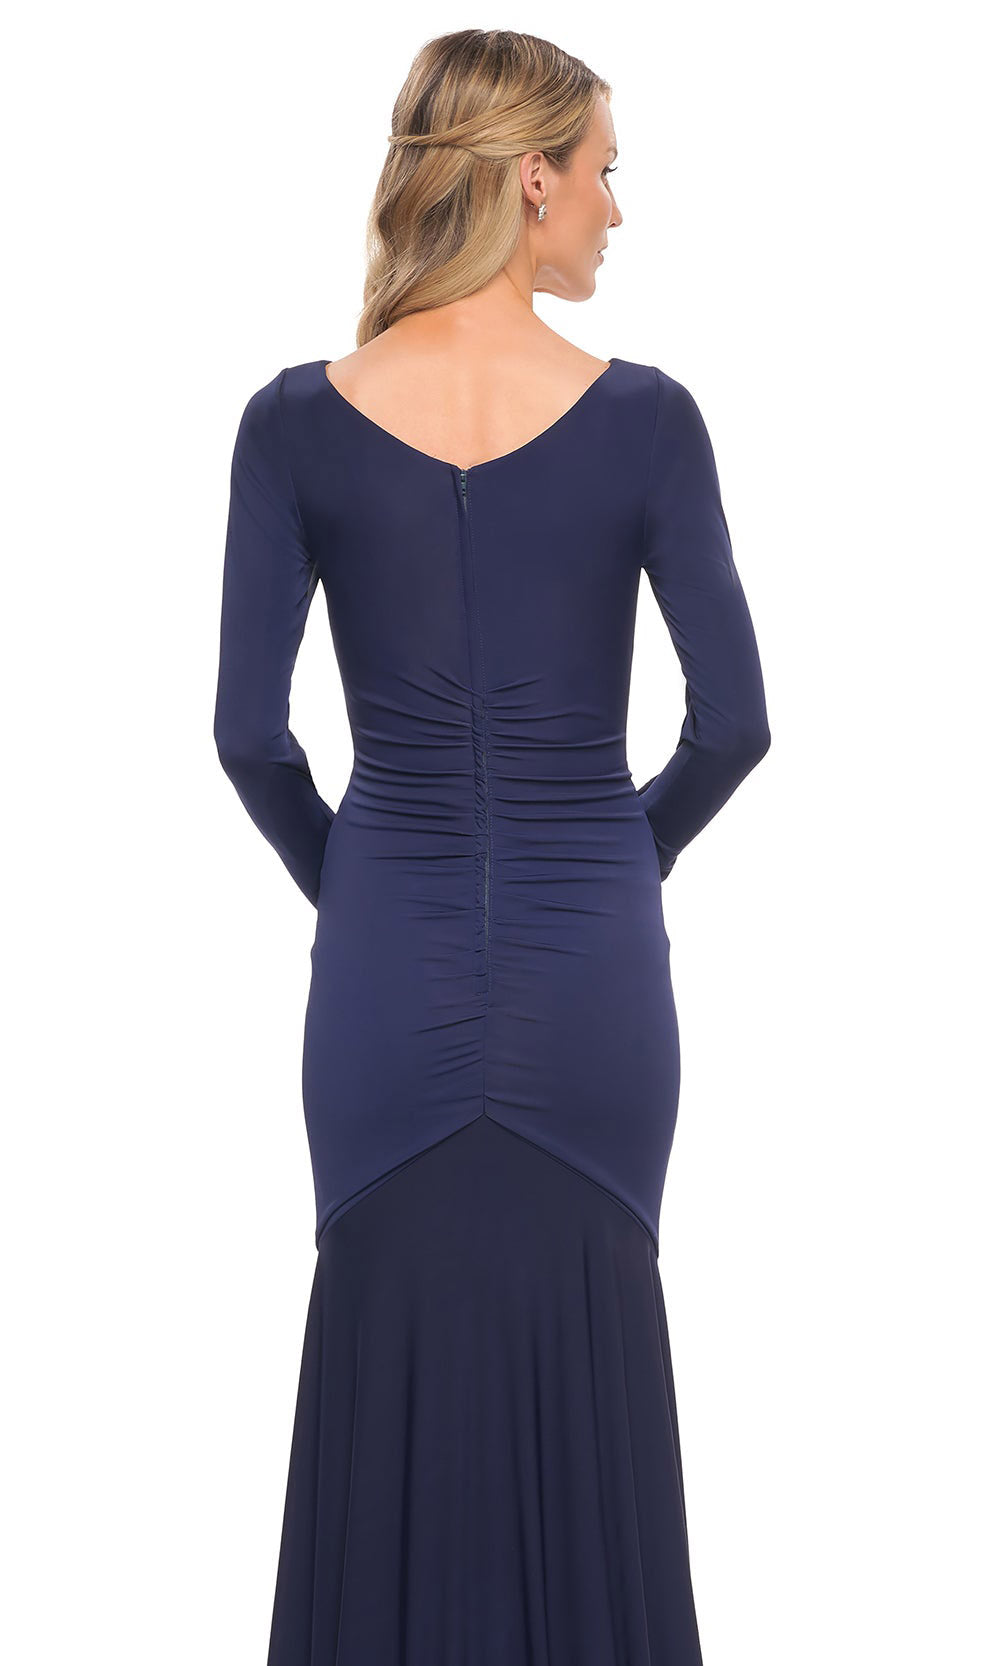 La Femme - 30010 Long Sleeved Ruched Jersey Evening Dress In Blue